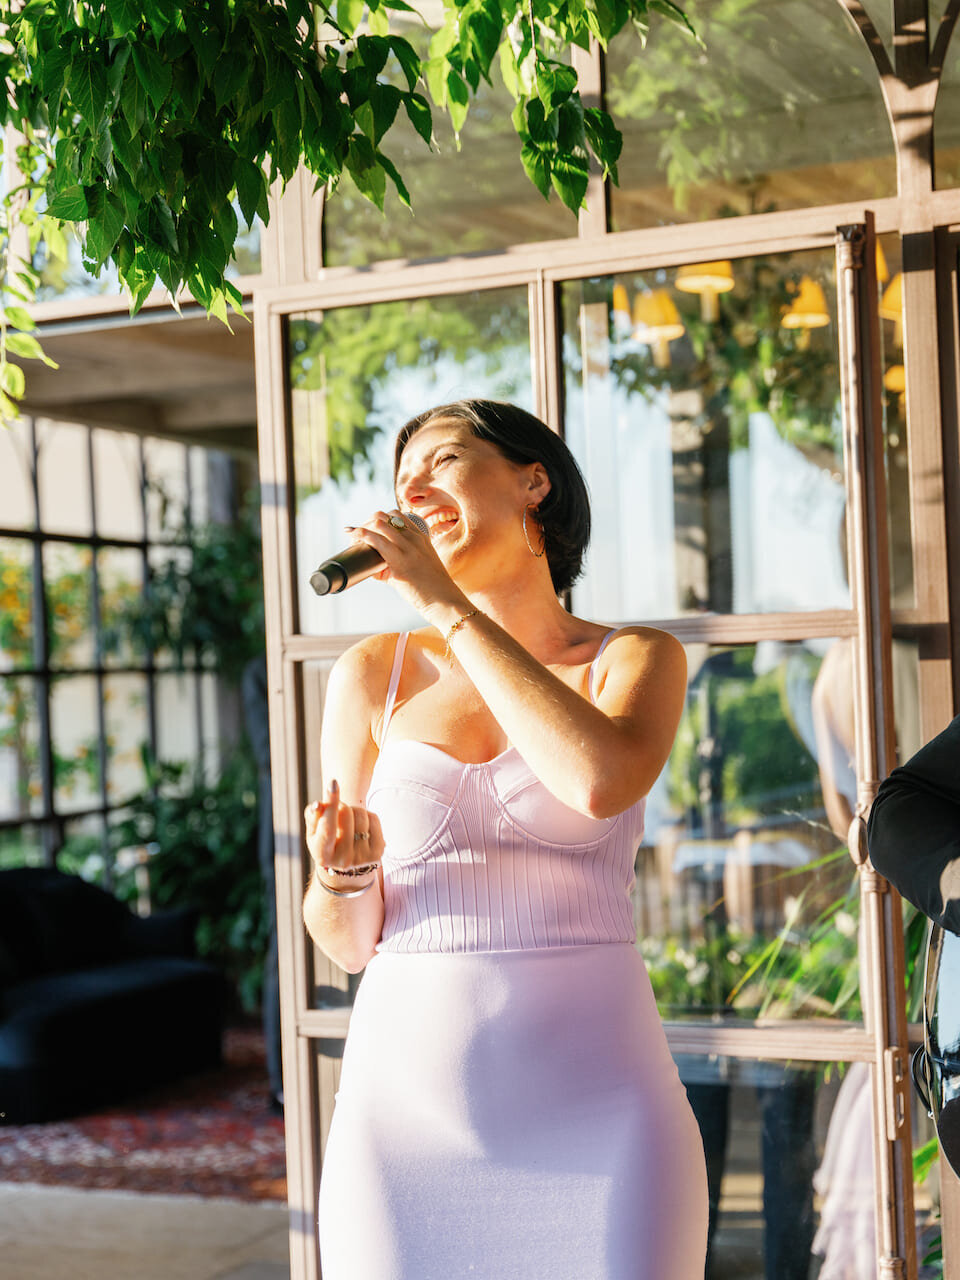 Outdoor-wedding-cocktail-hour-singer